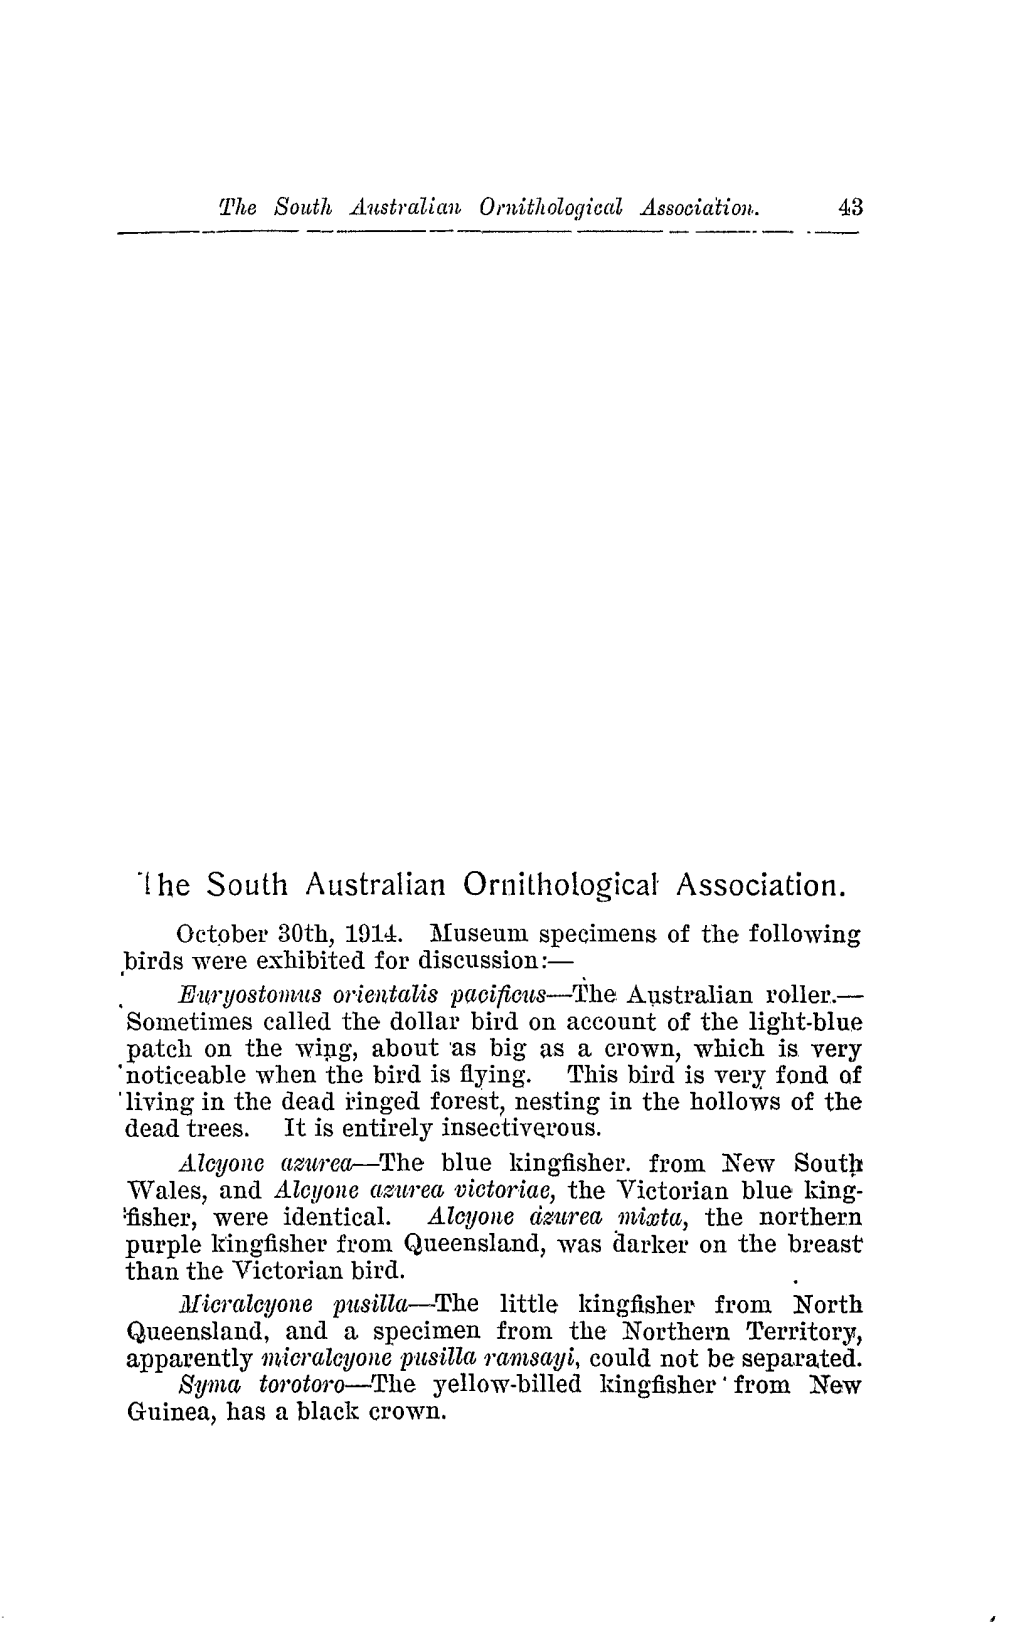 '1He South Australian Ornithological Association